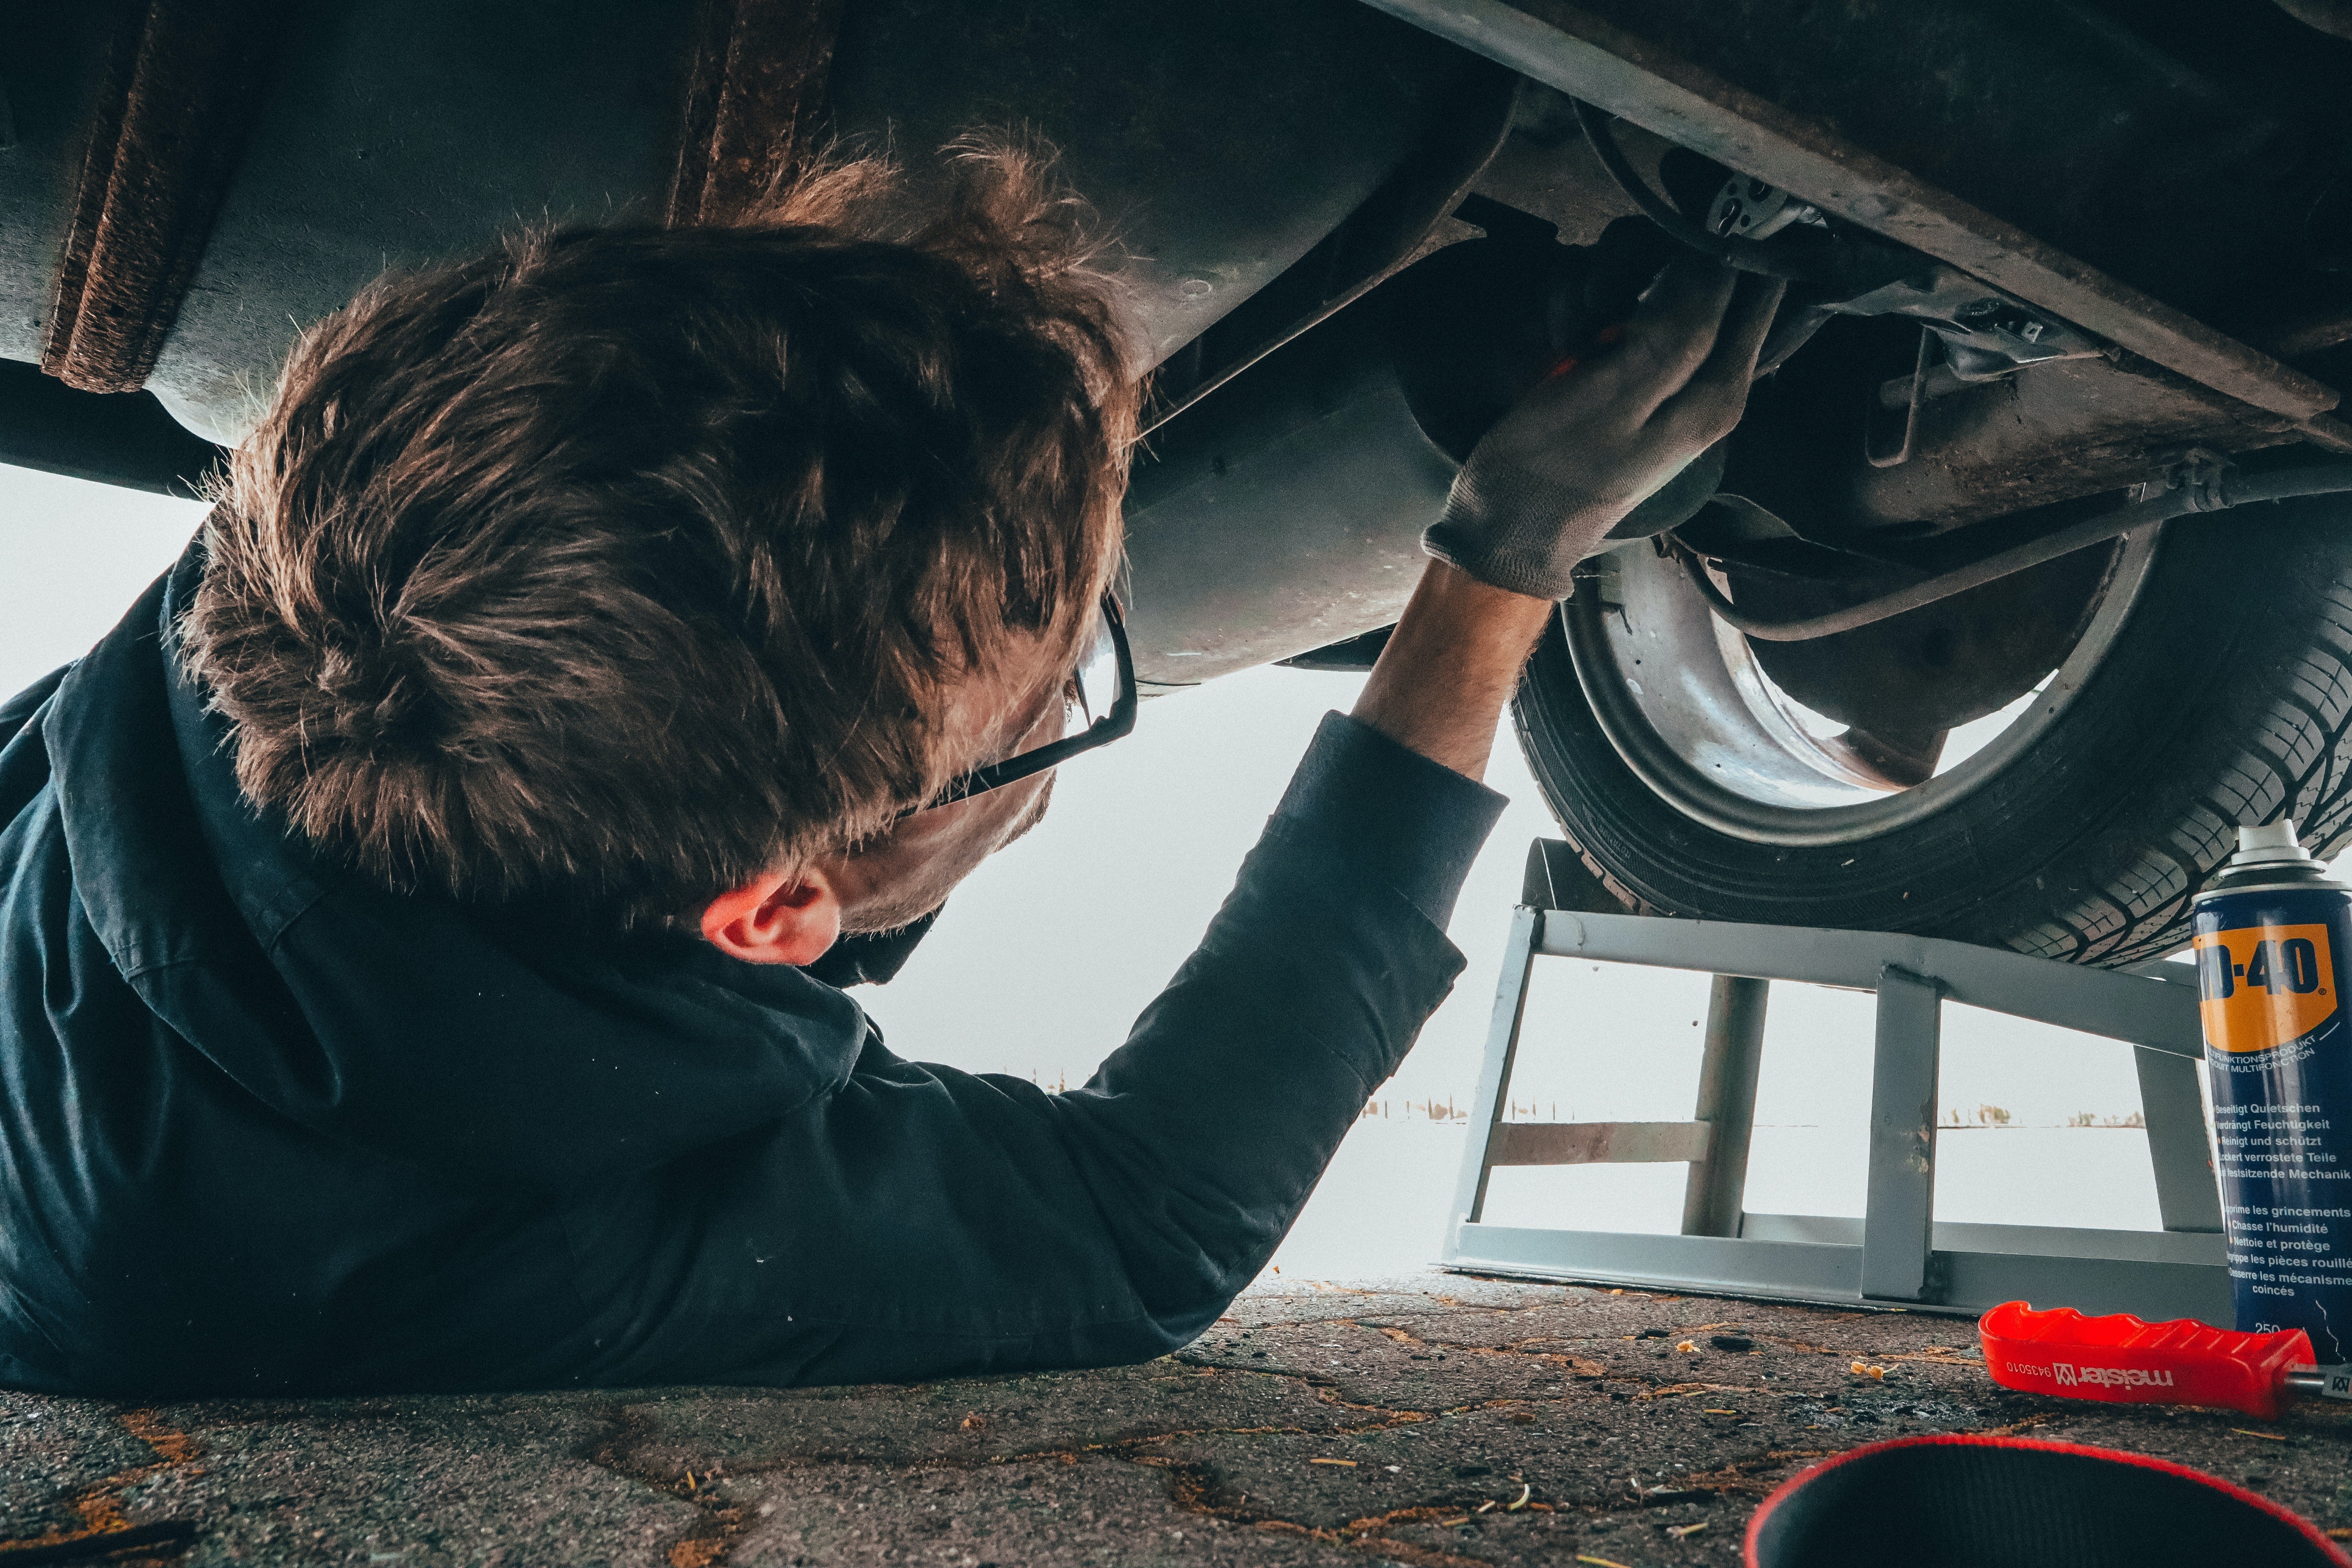 Mechanic at work under a car | Source: Pexels